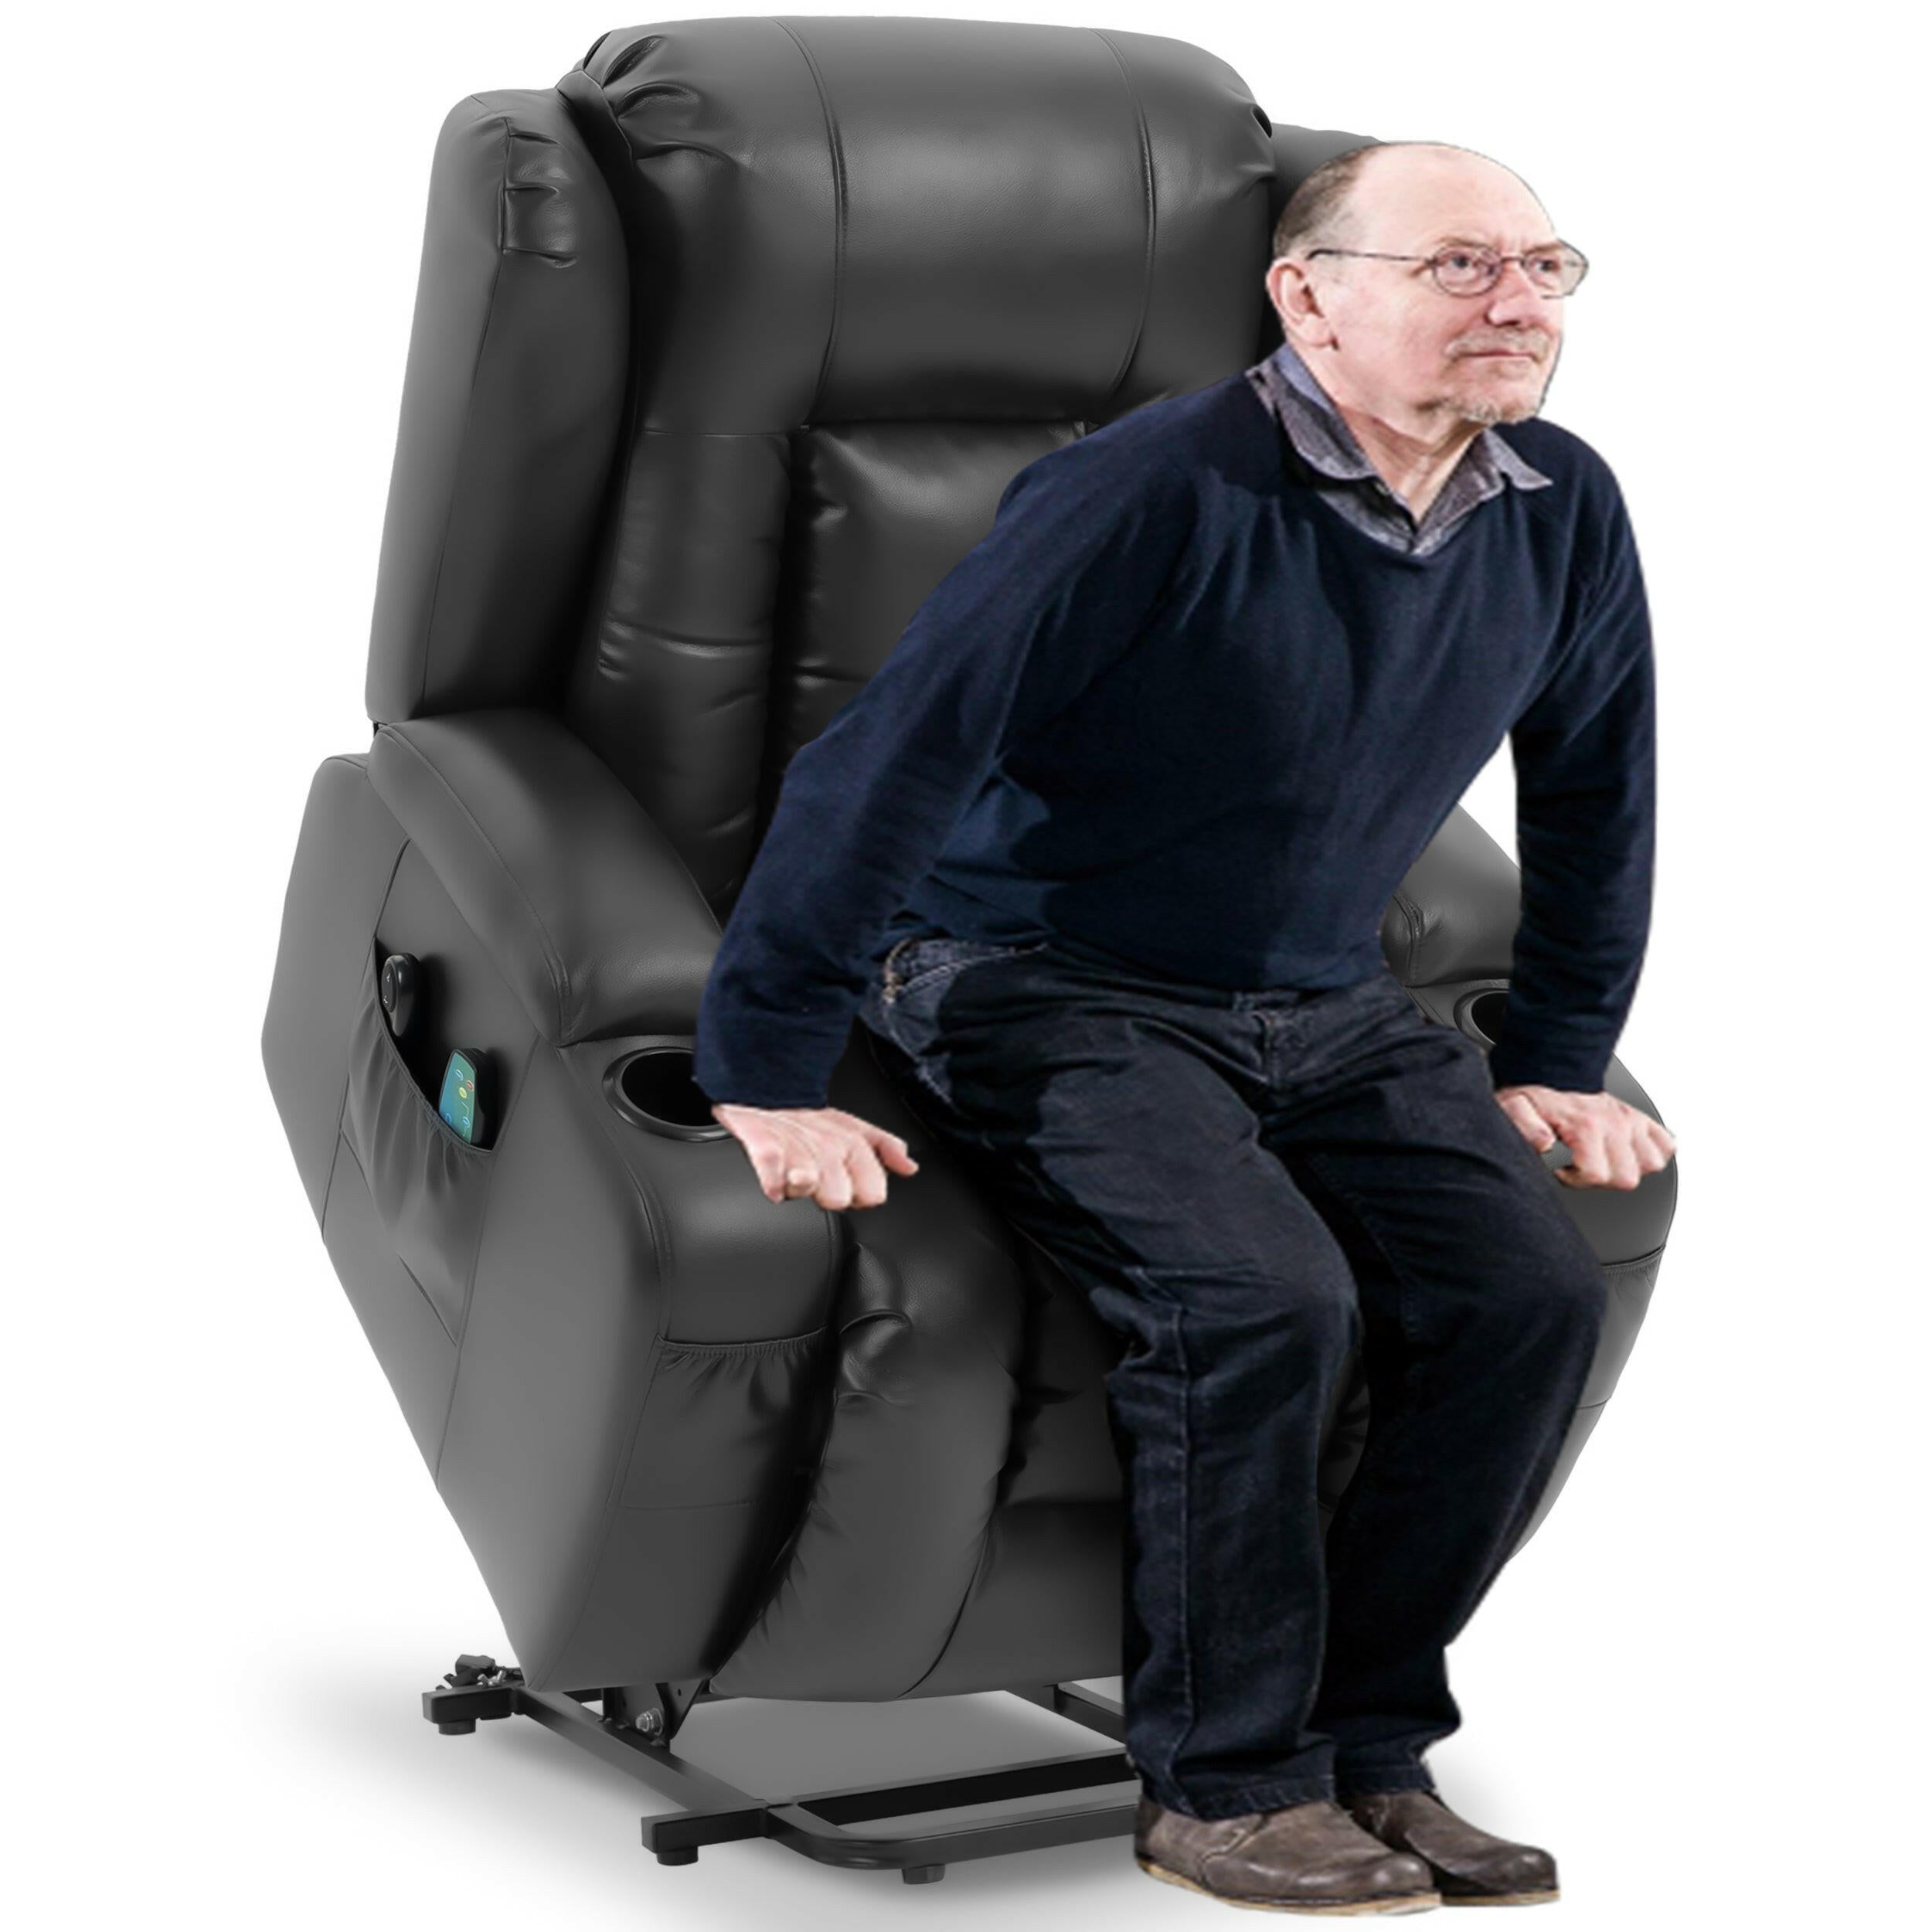 armchair chair